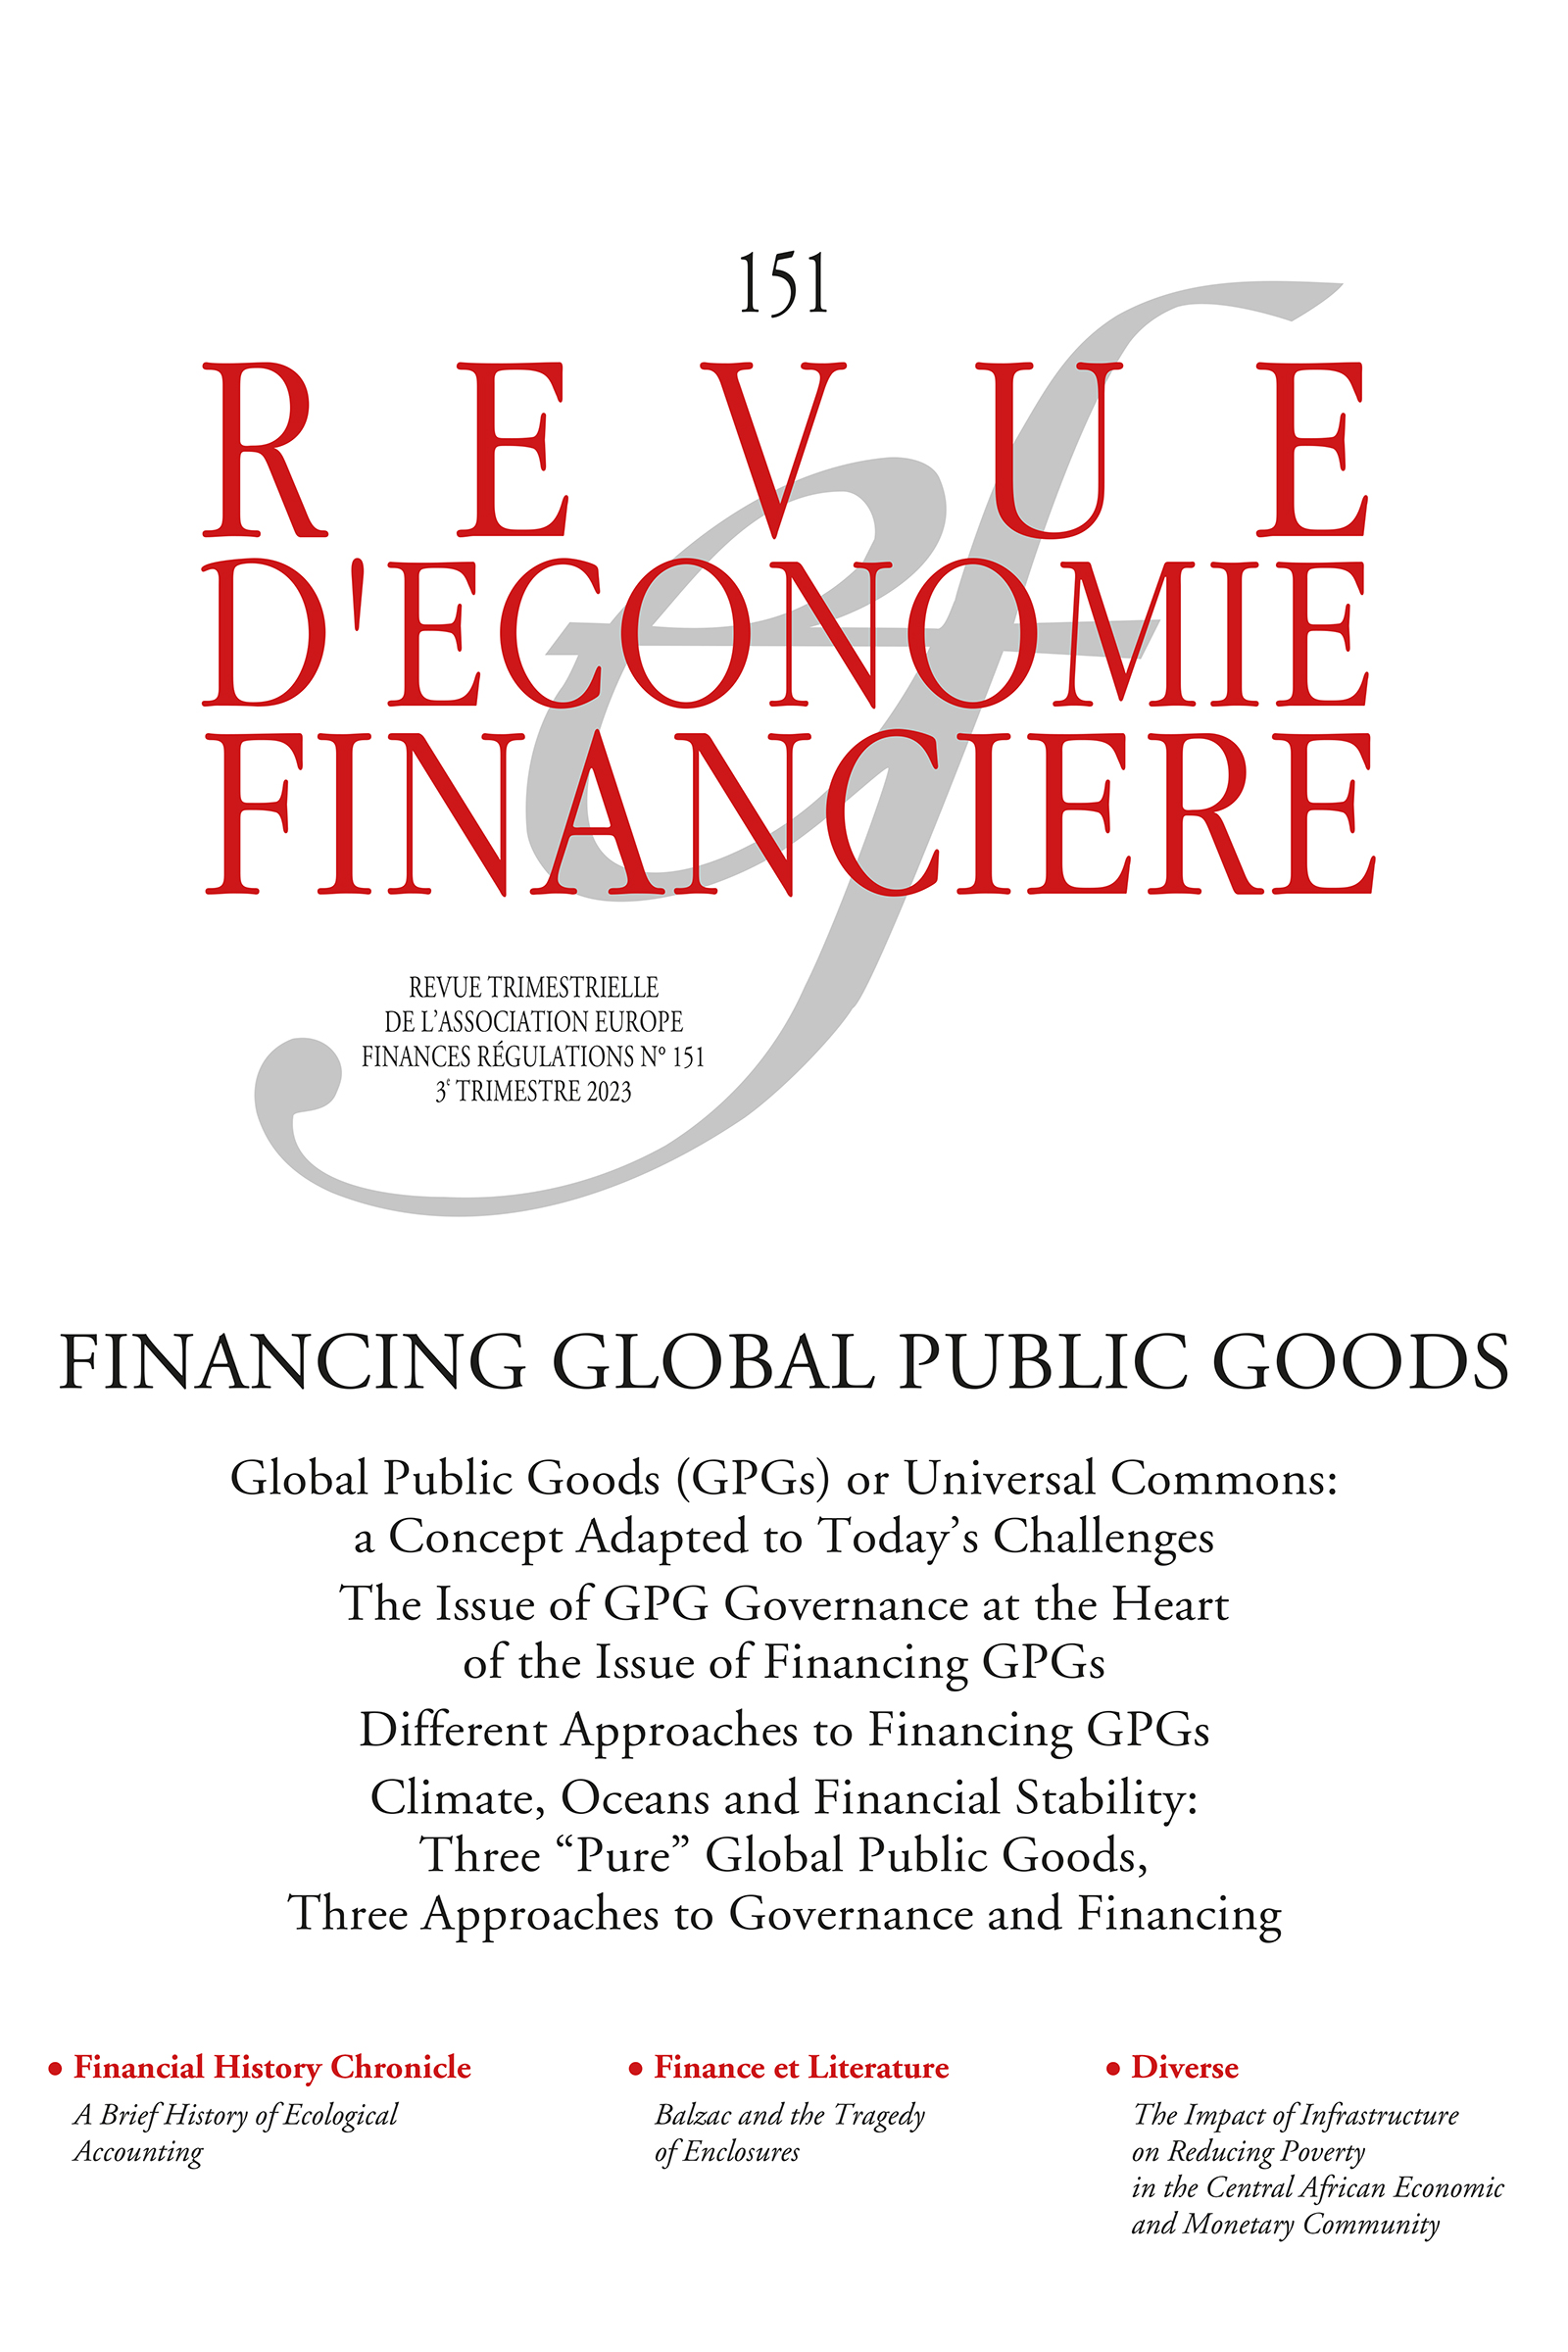 Financing Global Public Goods